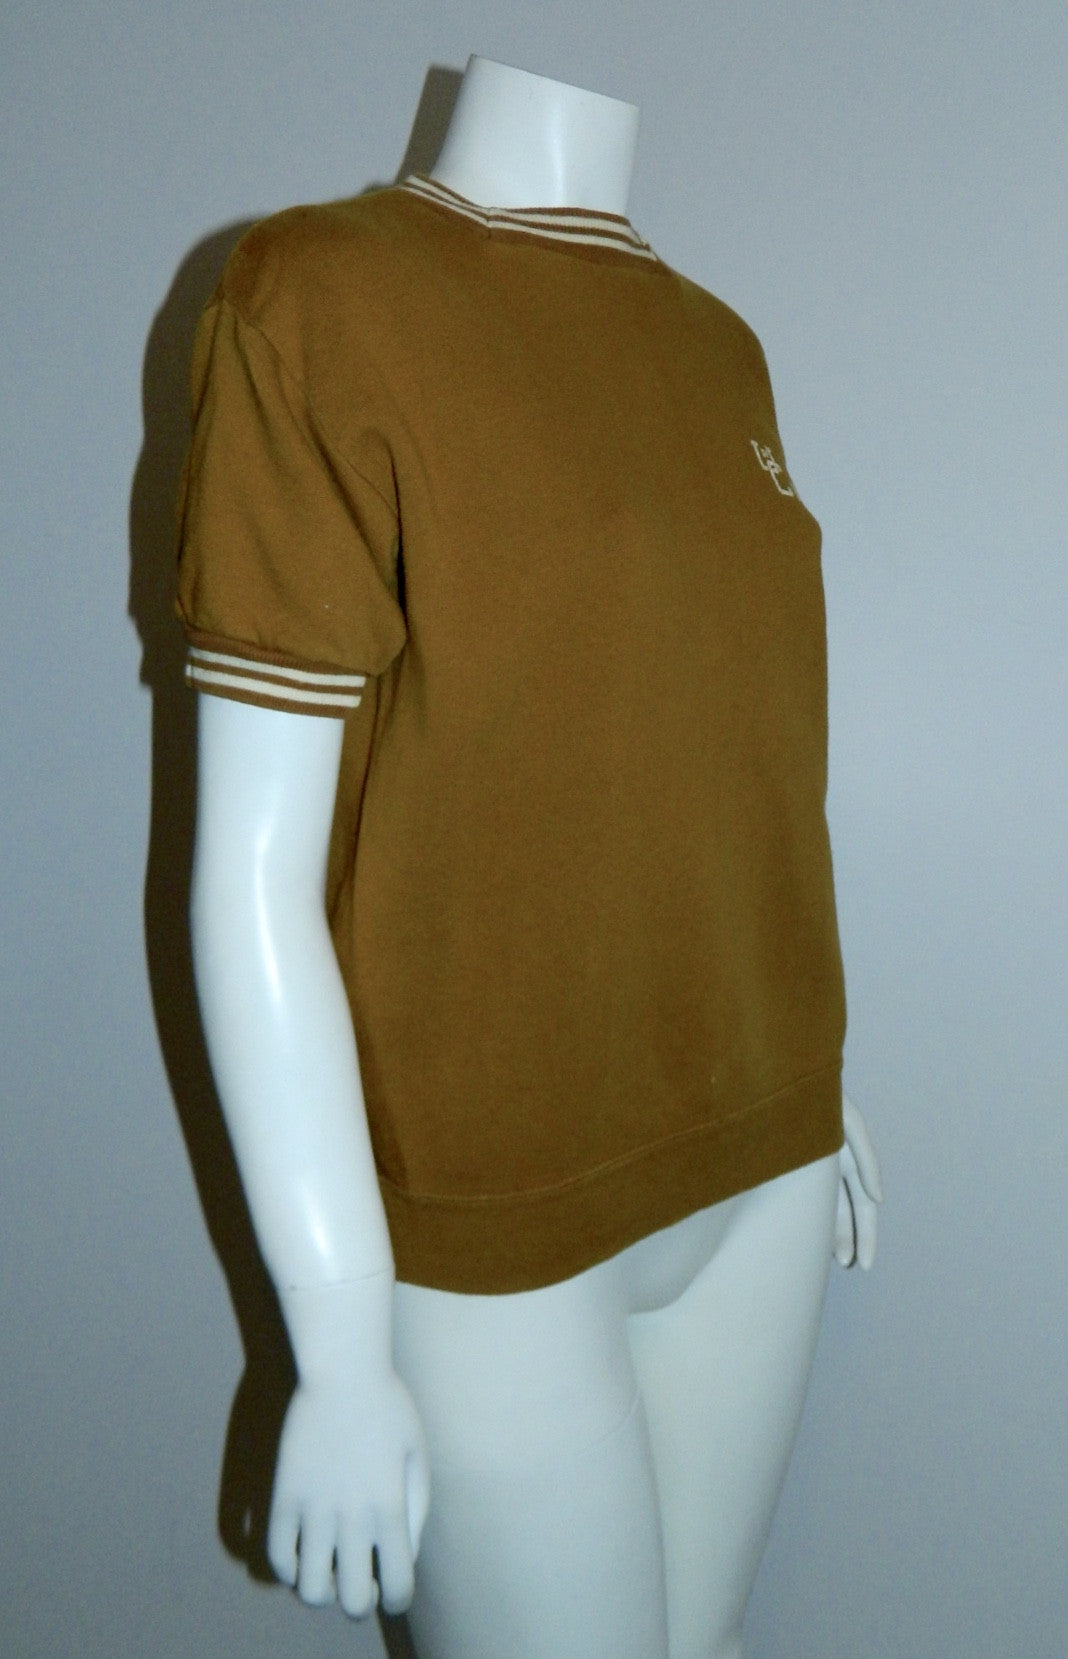 vintage 1960s sweatshirt University of Chicago tee shirt gold adult XS - S MCM